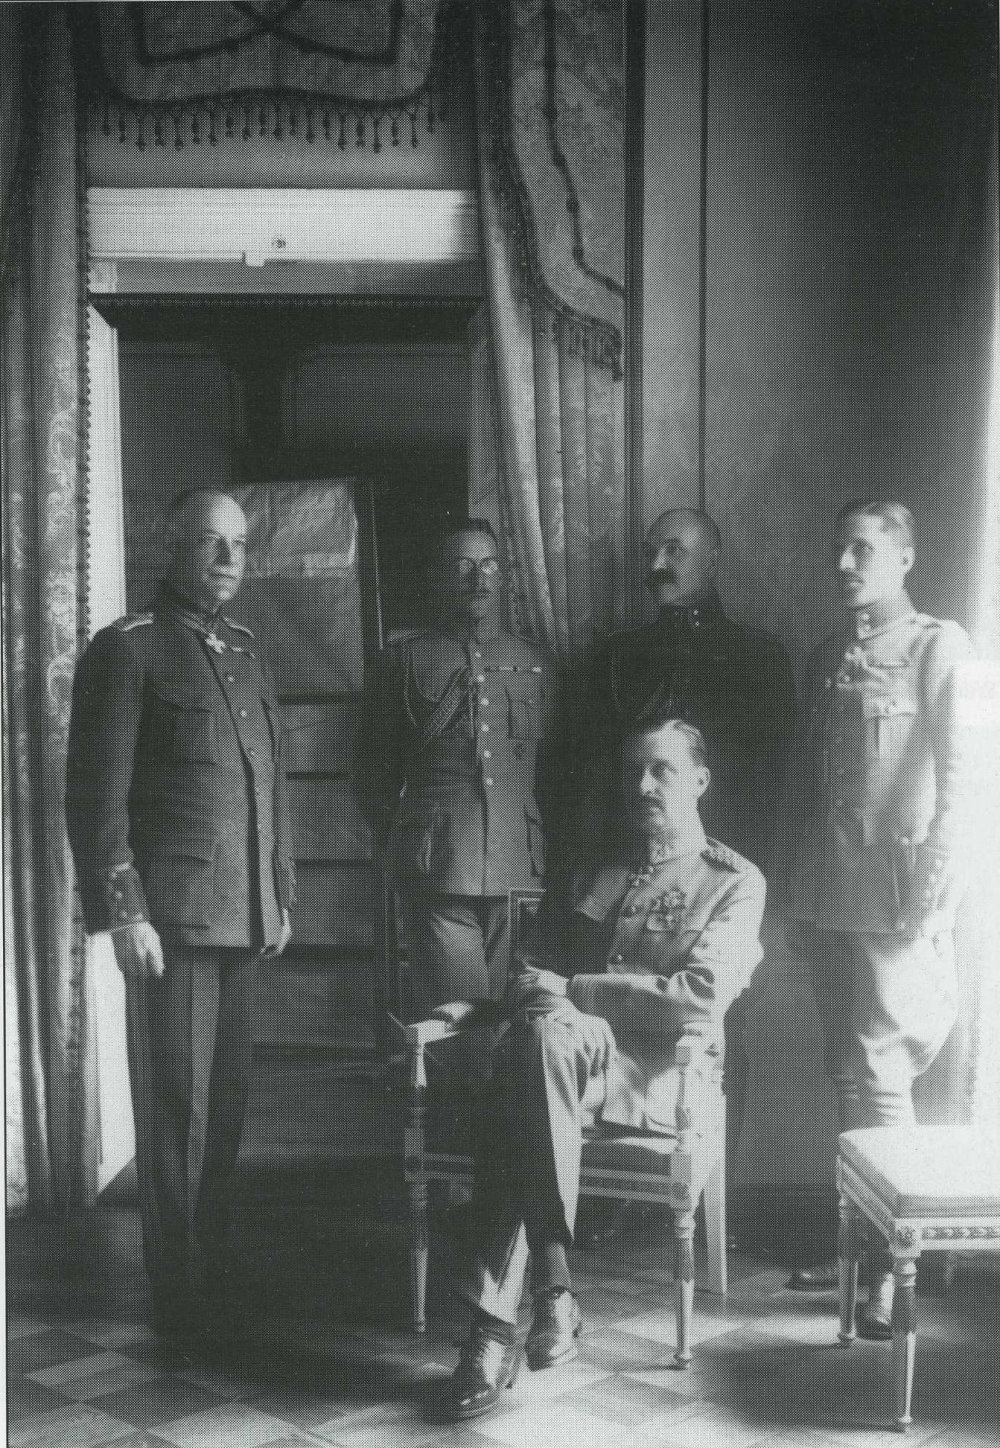 Mannerheim (seated) with his lieutenants Lilius, Kekoni, Kallela, and Rosenbröijer, circa 1919